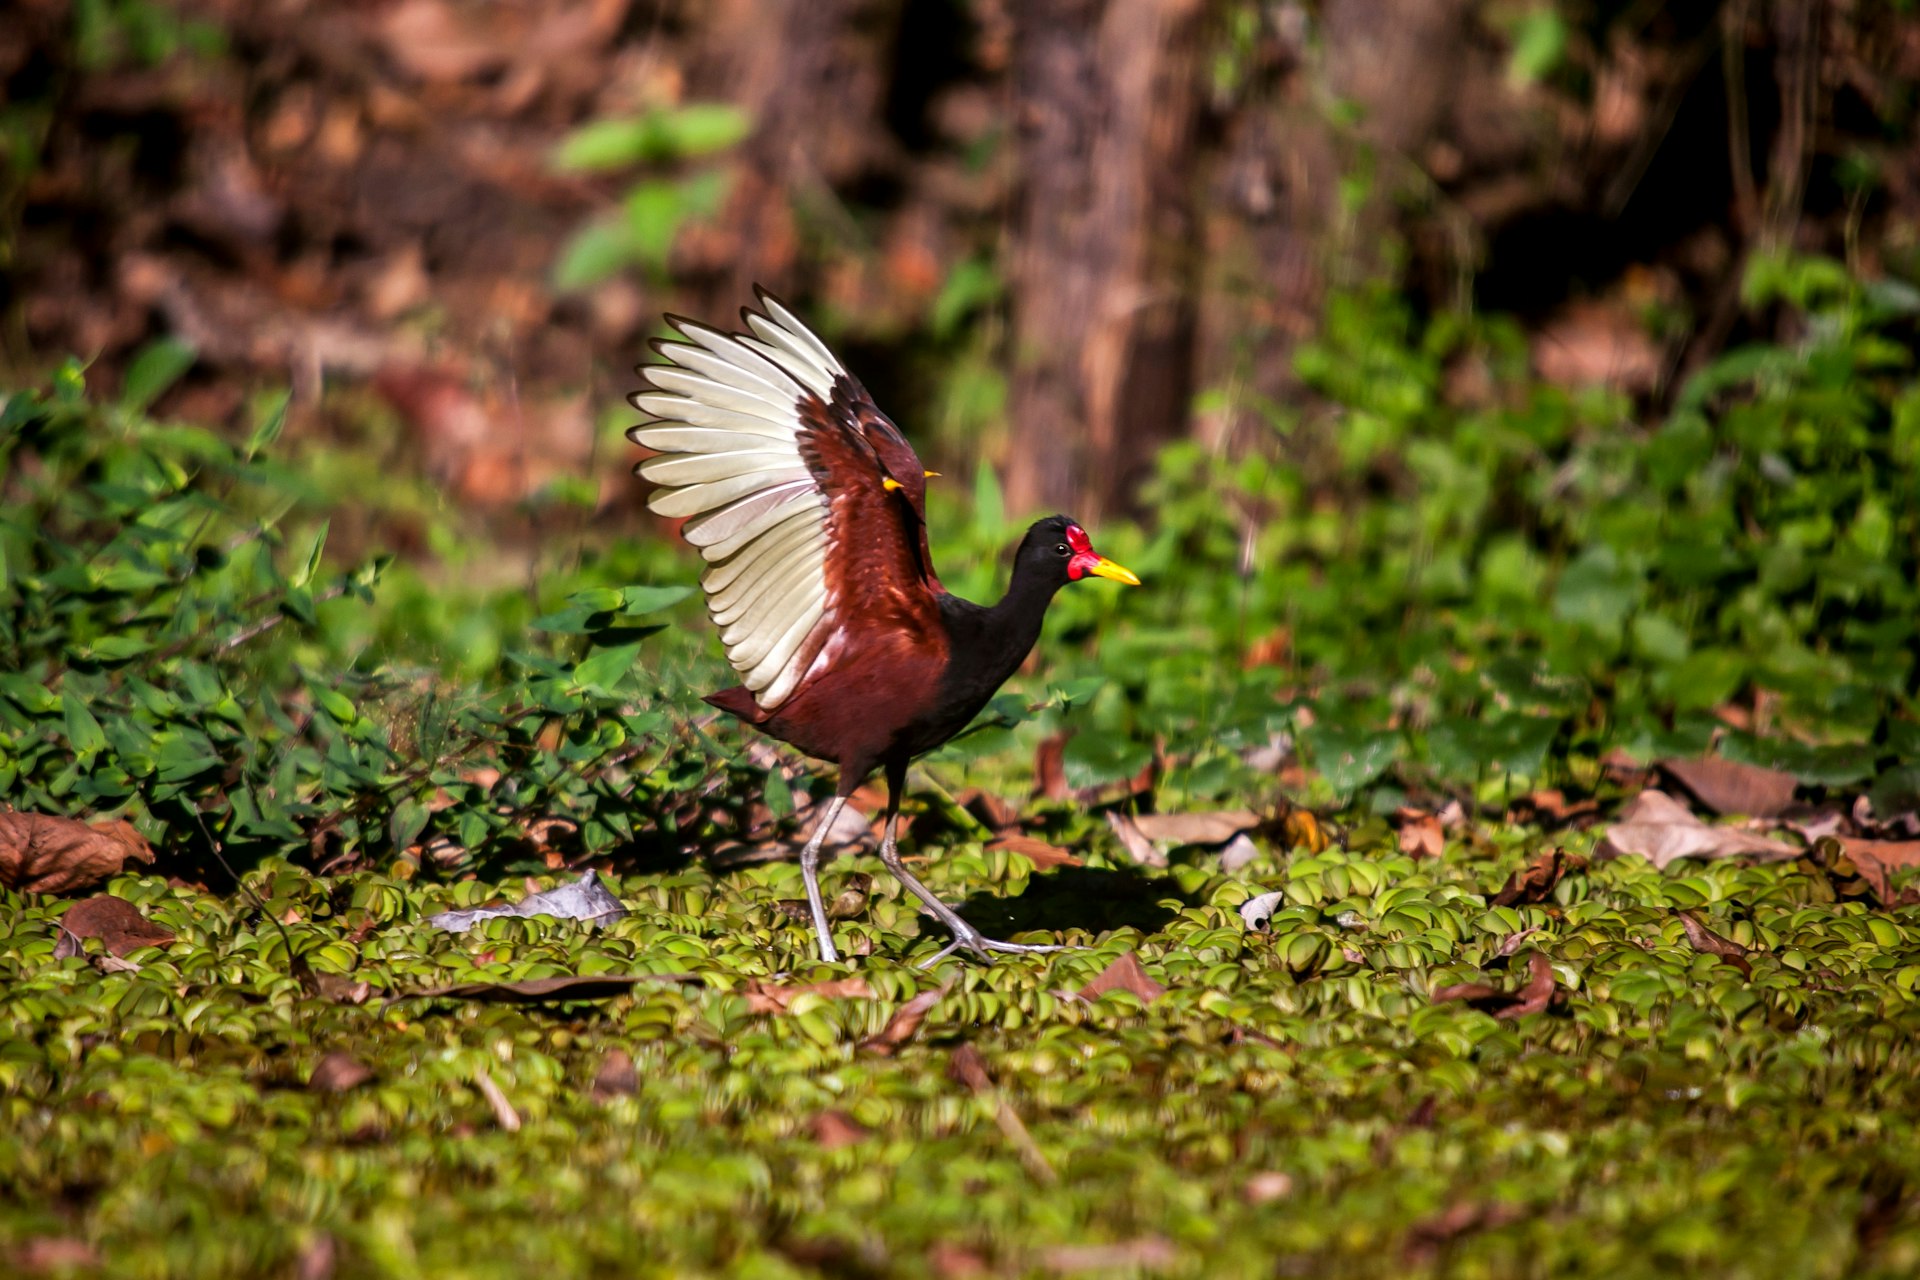 A wattled jacana bird stretches its wings in the wetlands near Cariacica, Espirito Santo, Brazil